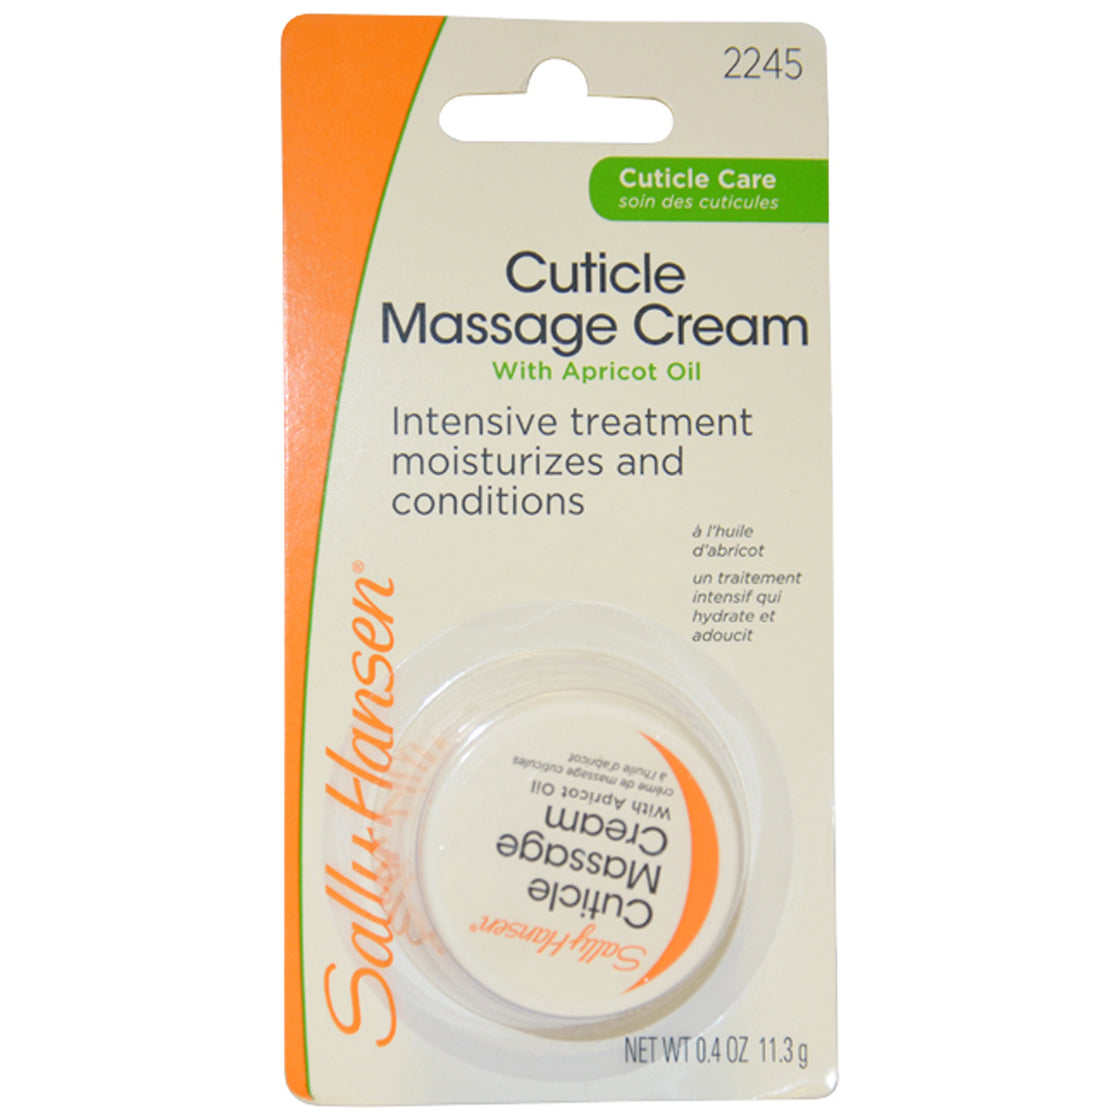 Cuticle Massage Cream by Sally Hansen for Unisex - 0.4 oz Cream